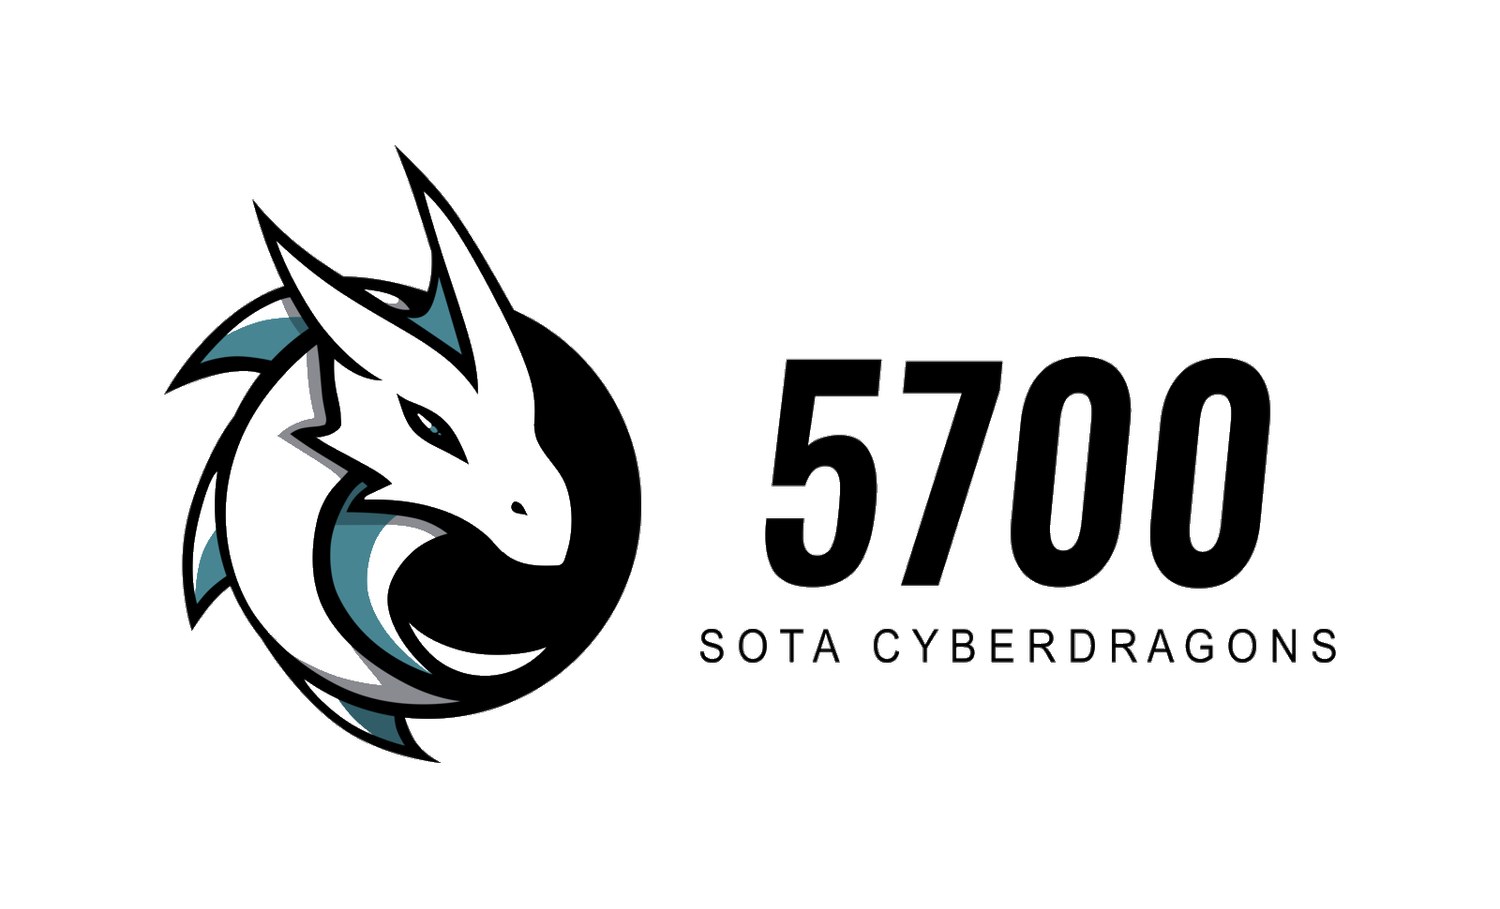 Team 5700 | The SOTA Cyberdragons